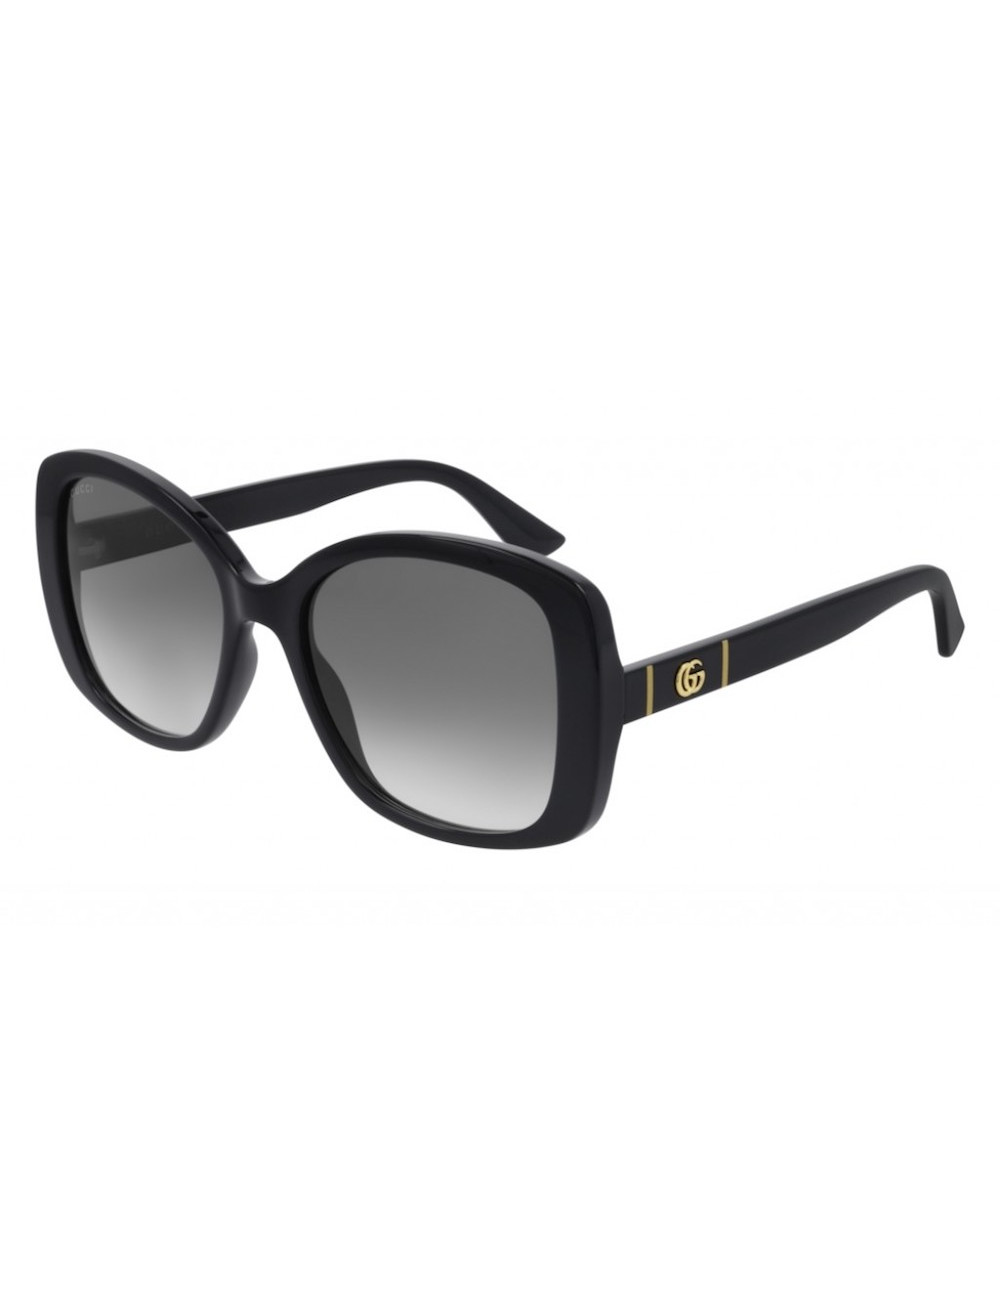 Best Sellers in Women's Gucci Sunglasses Feb 2022 – Uniglasses